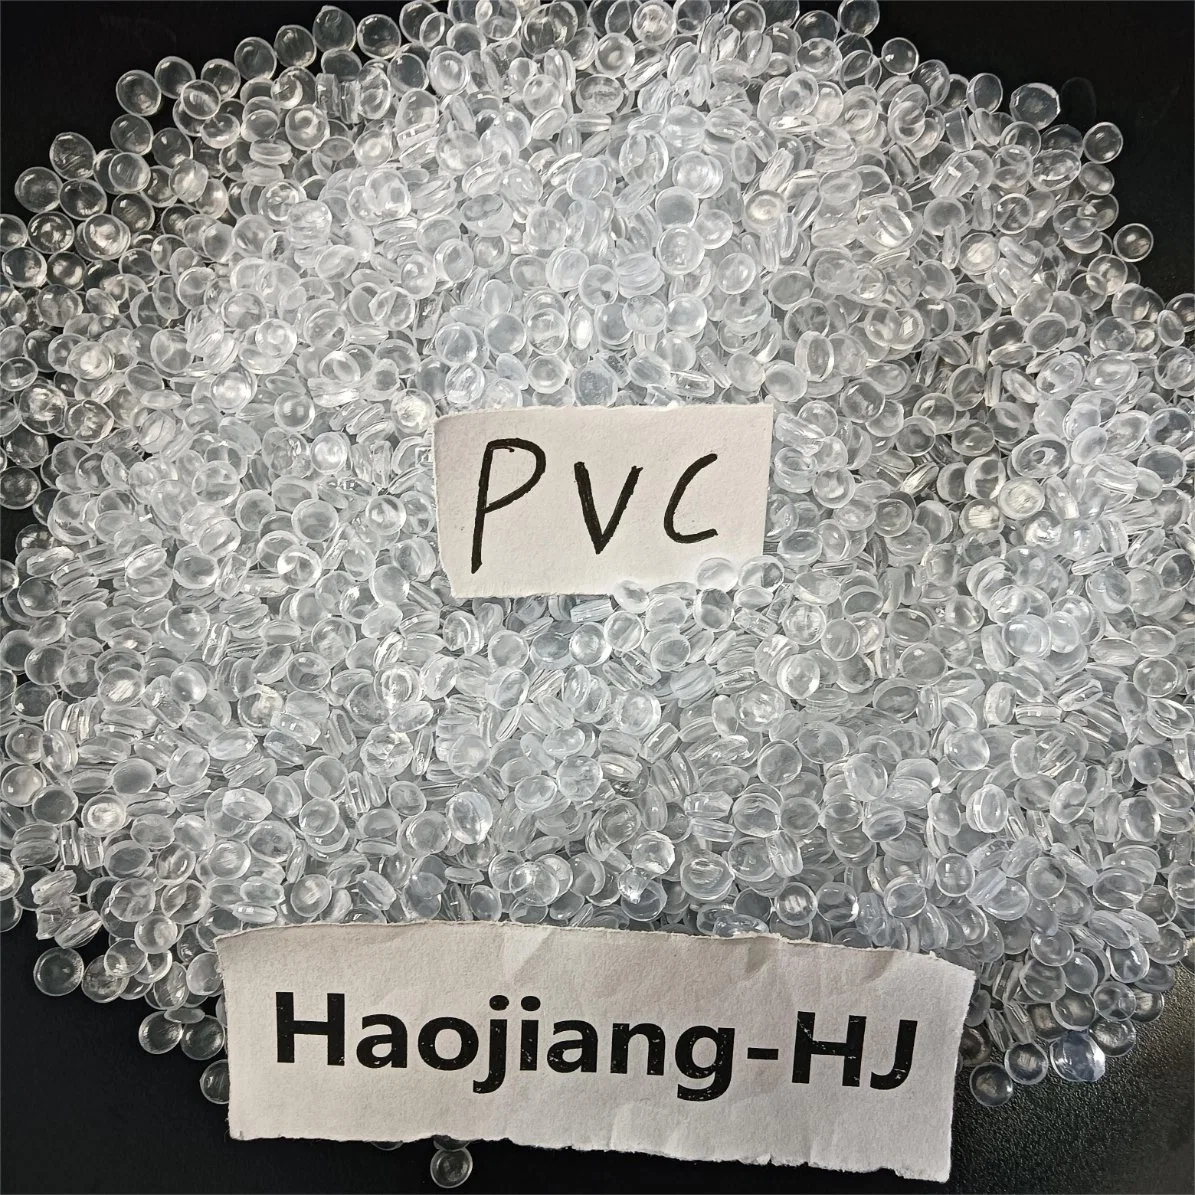 PVC Plastic Granules for Shoe Sole PVC Raw Material Soft PVC Pellets Granules